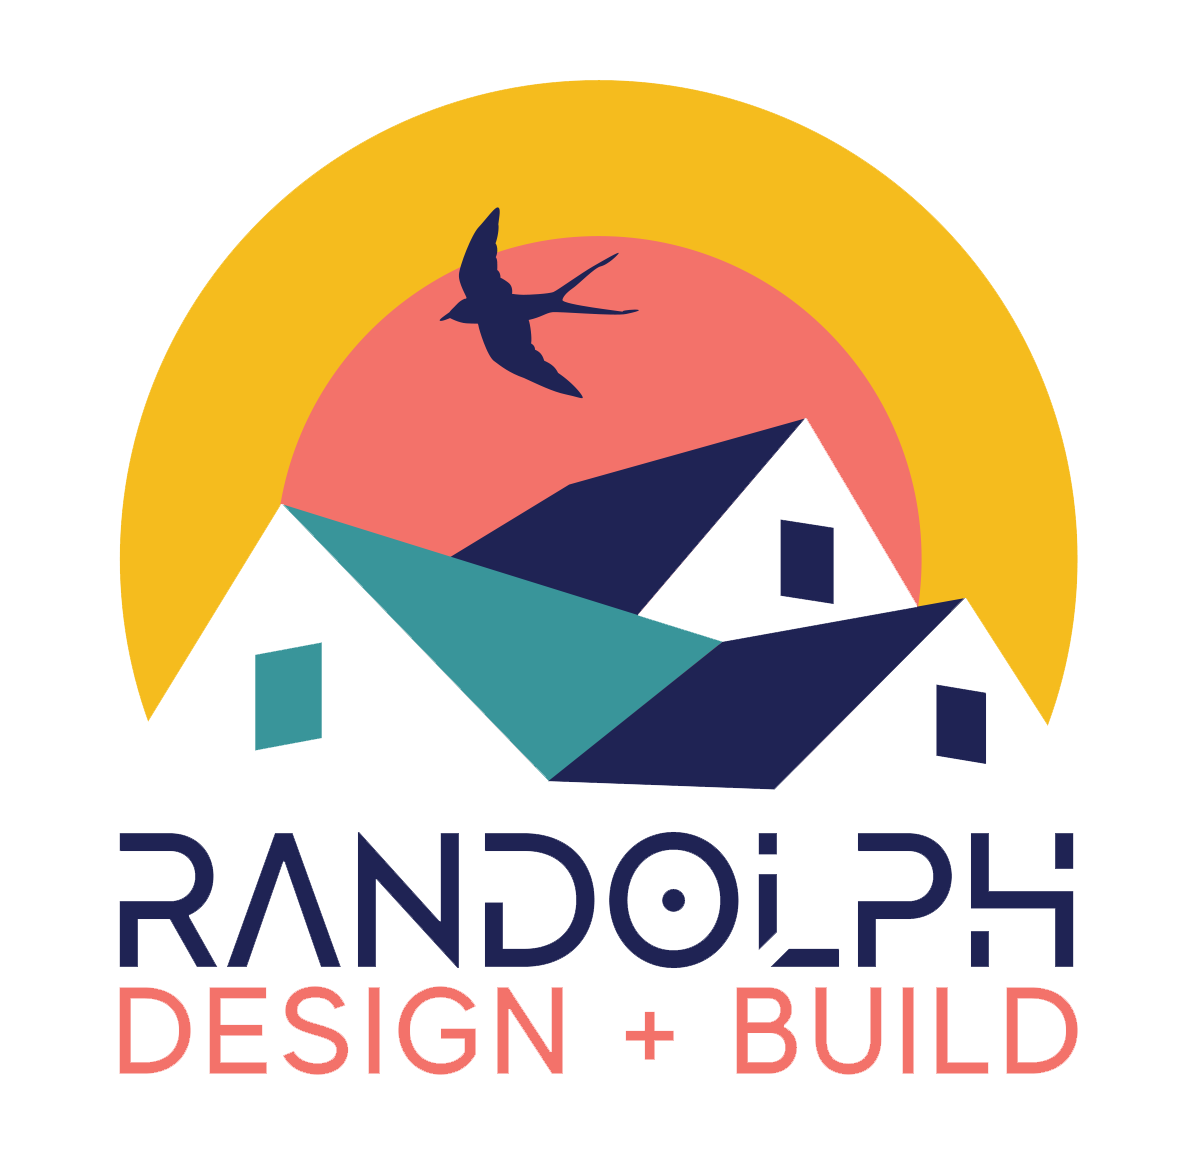 Randolph Design + Build